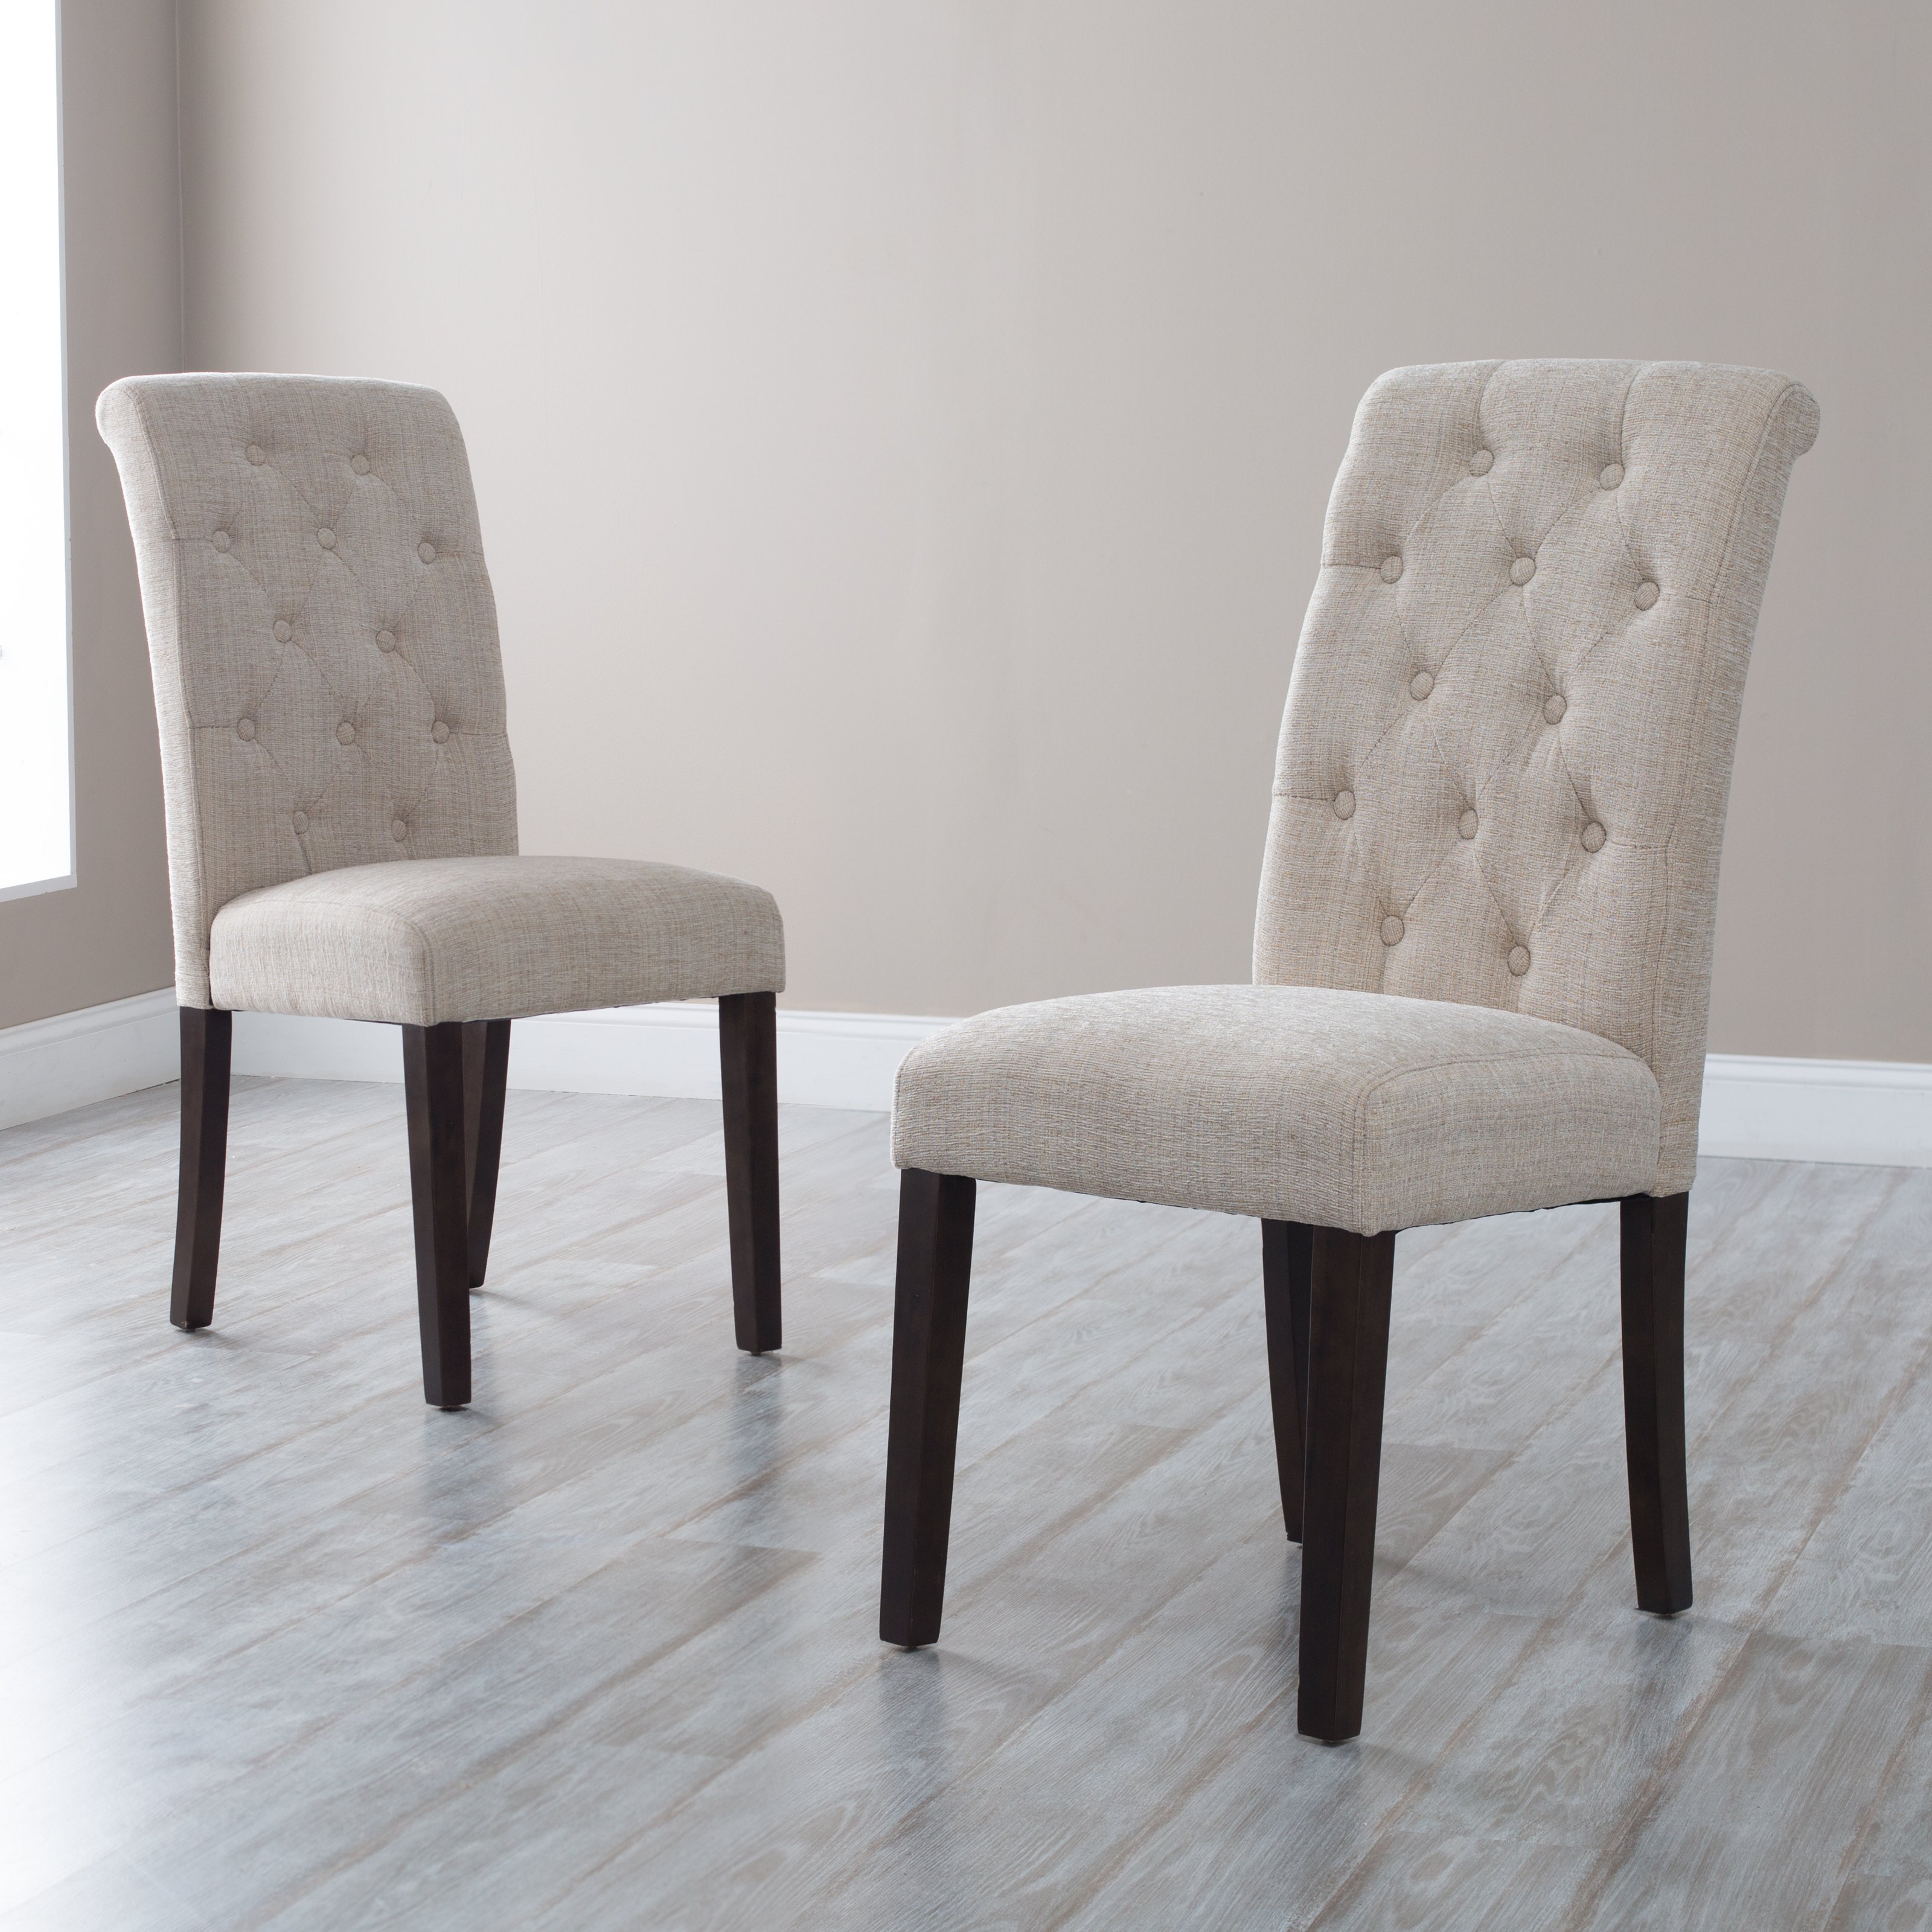 palazzo dining chairs - set of 2 | hayneedle VIJXDCB